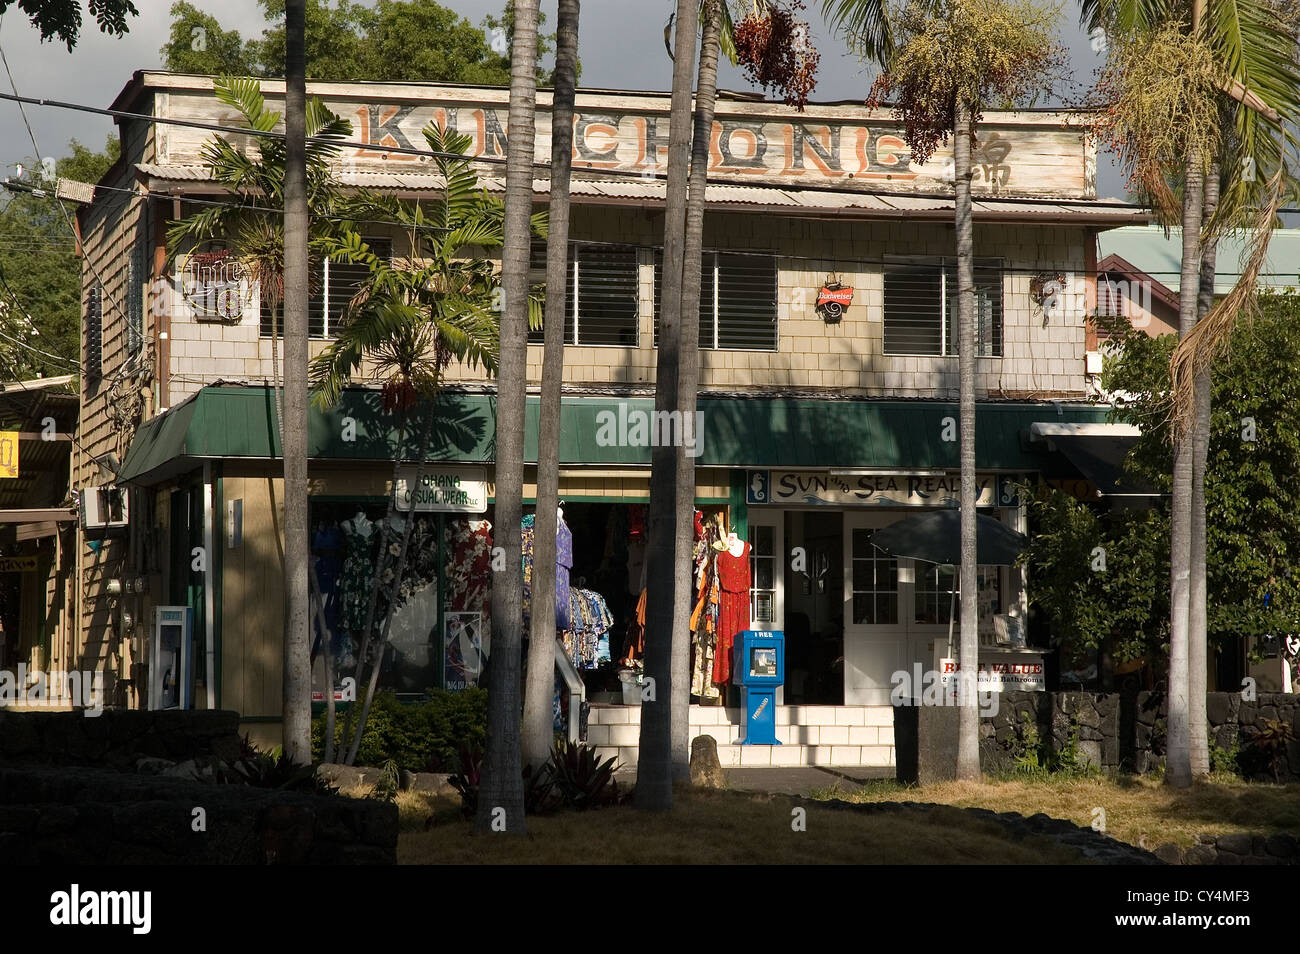 Elk284-2843 Hawaii, HI, Kailua-Kona, street scene, historical store front on main street Stock Photo